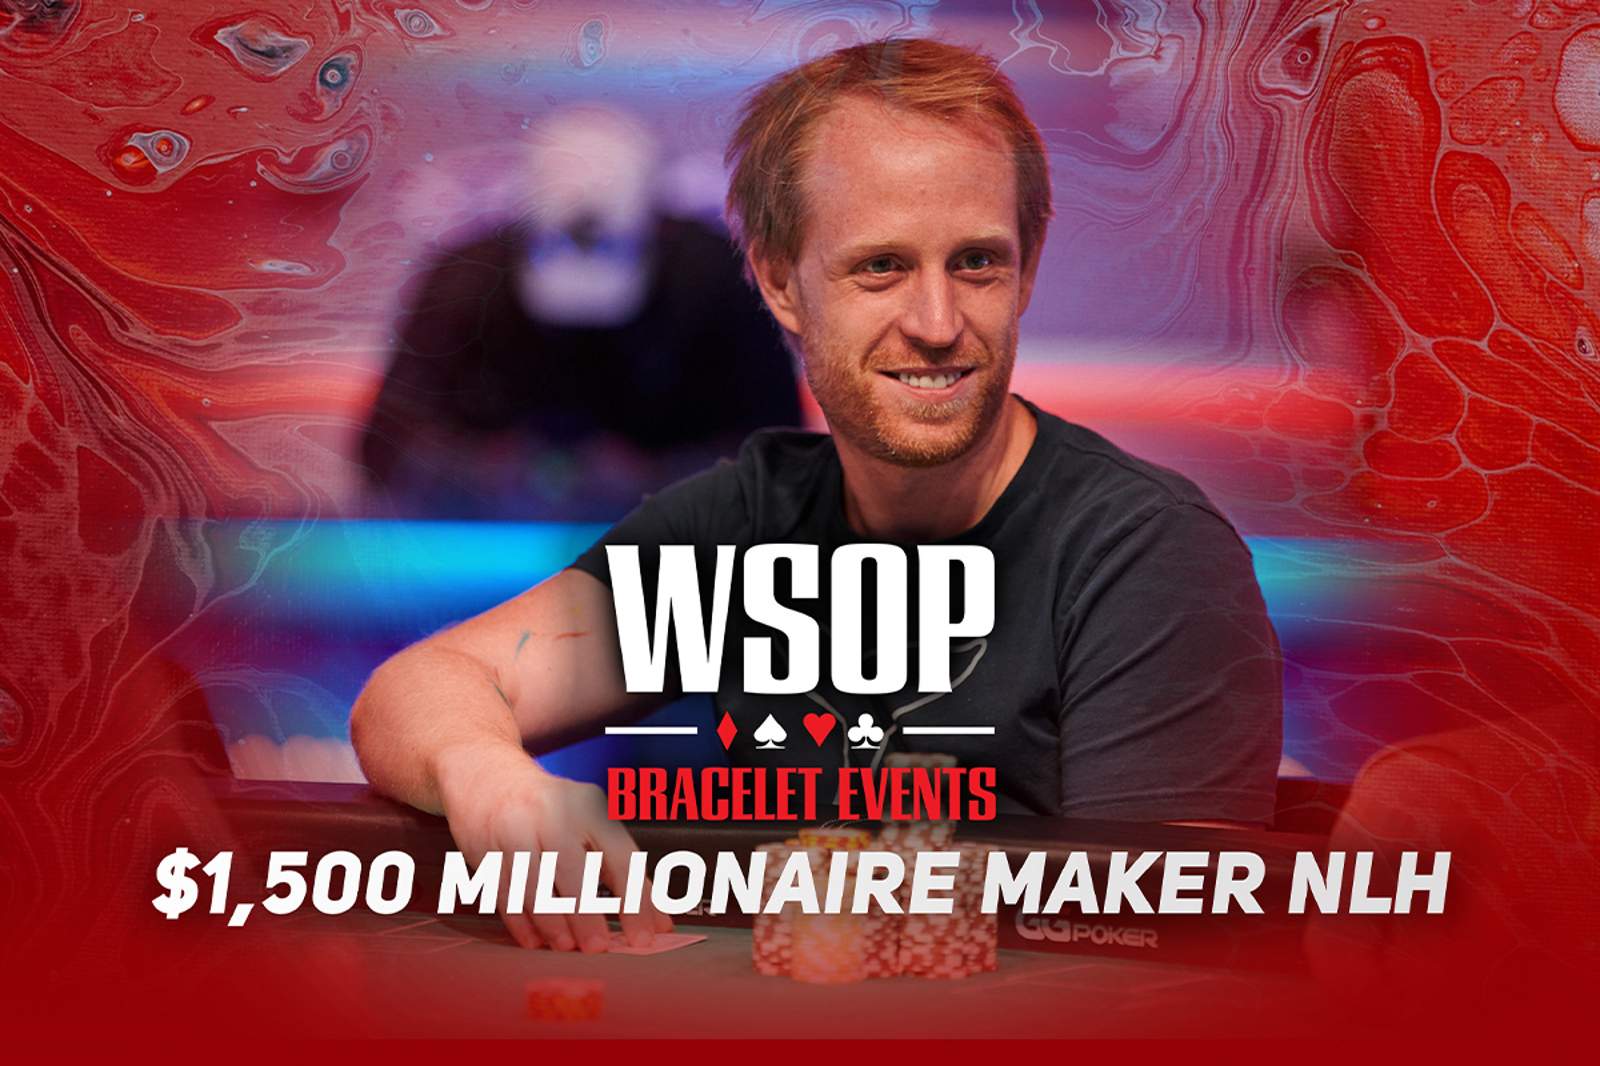 Watch the WSOP Event #17: $1,500 MILLIONAIRE MAKER Final Table on PokerGO.com at 8 p.m. ET